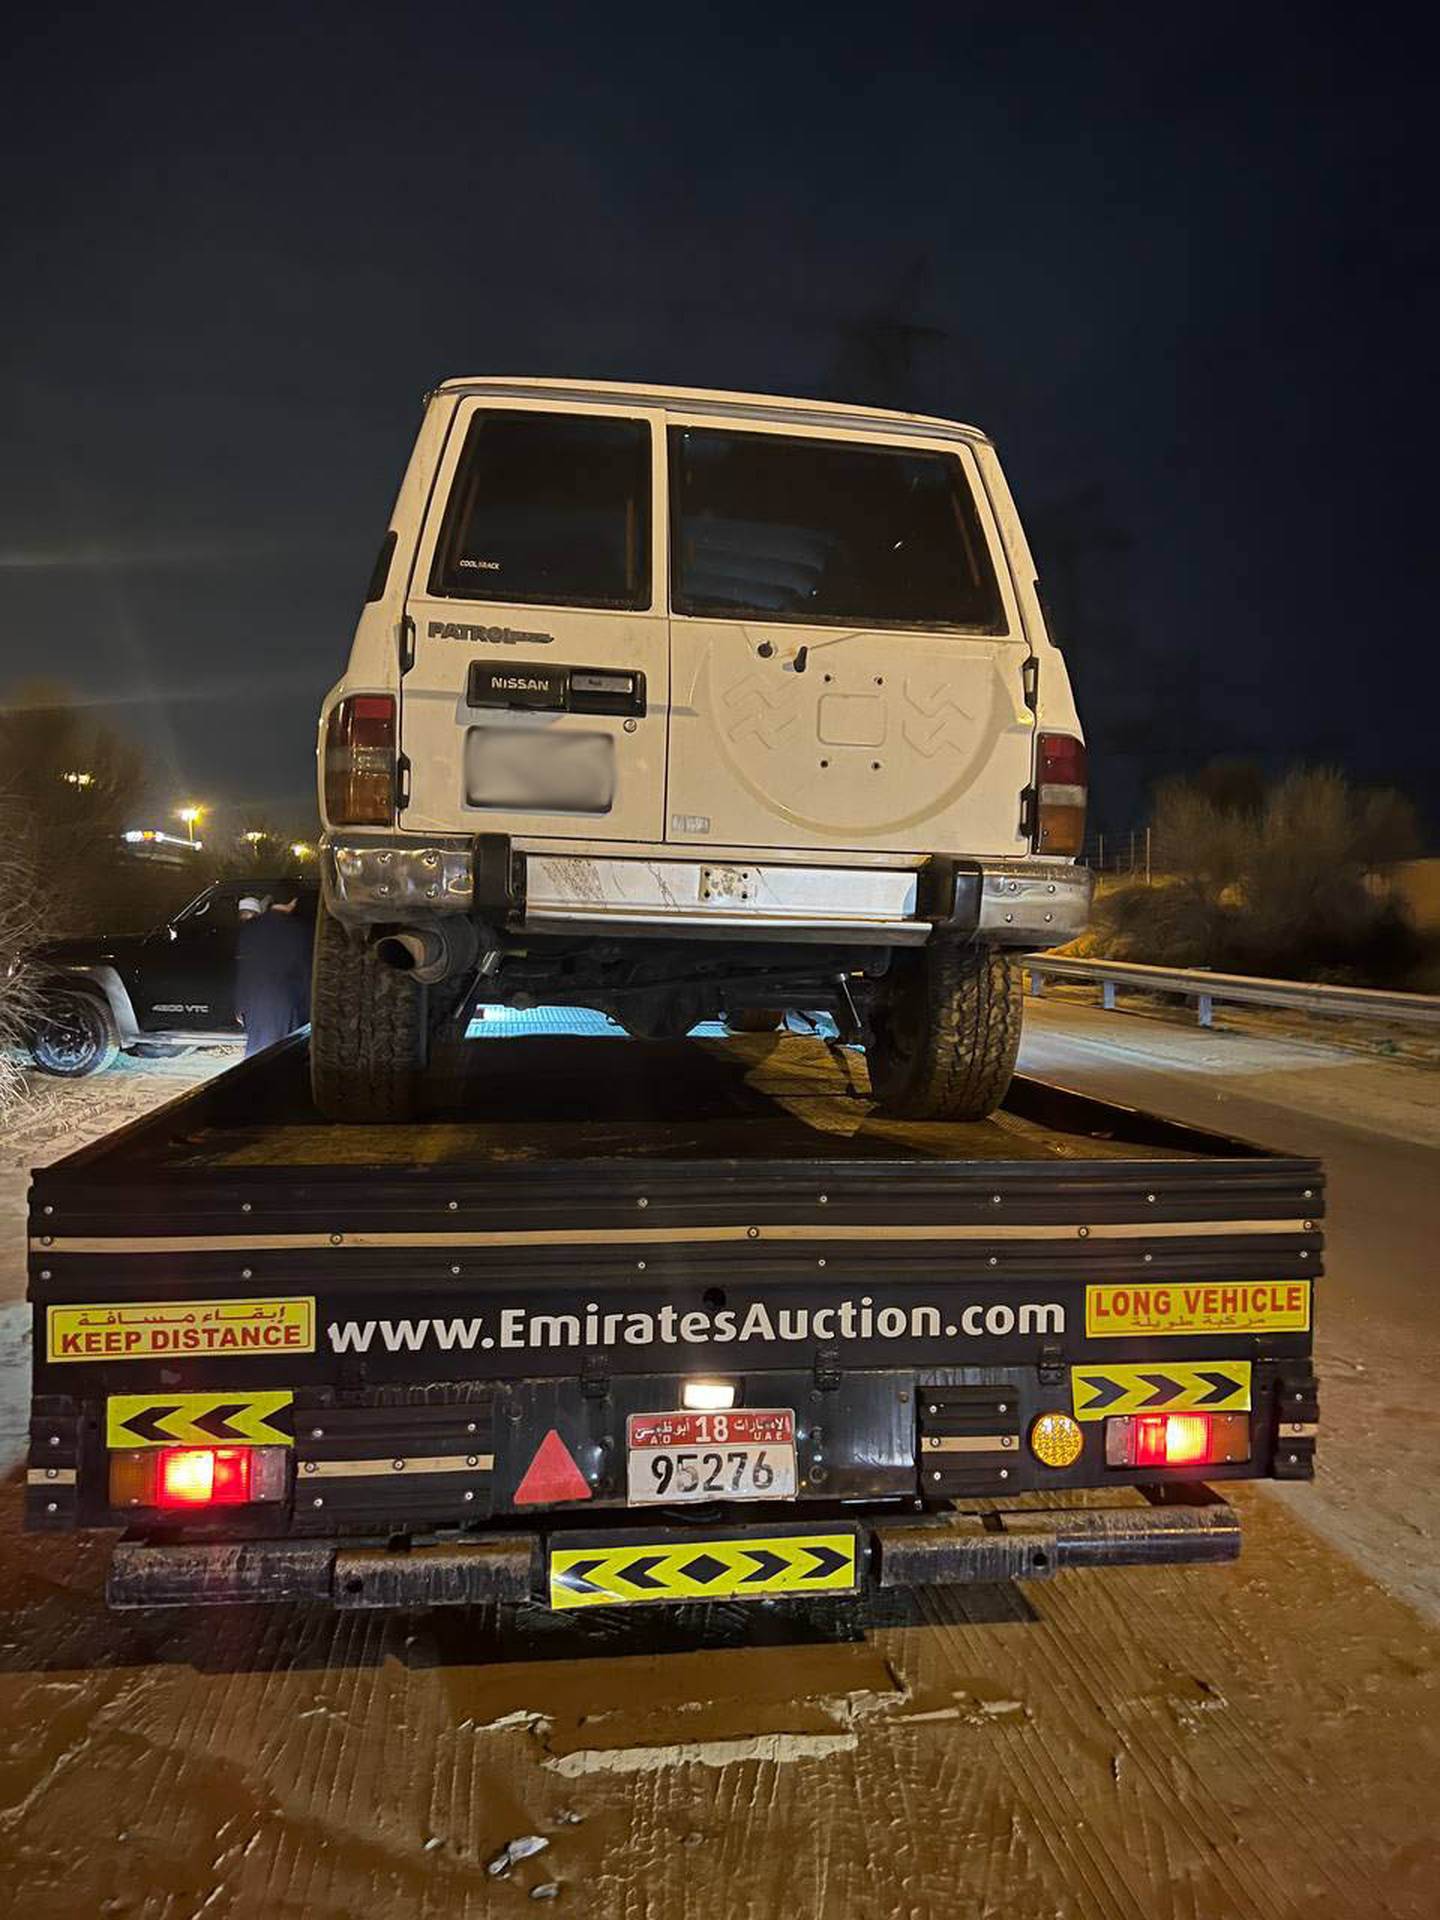 Cars were seized for performing dangerous stunts. Photo: Dubai Police